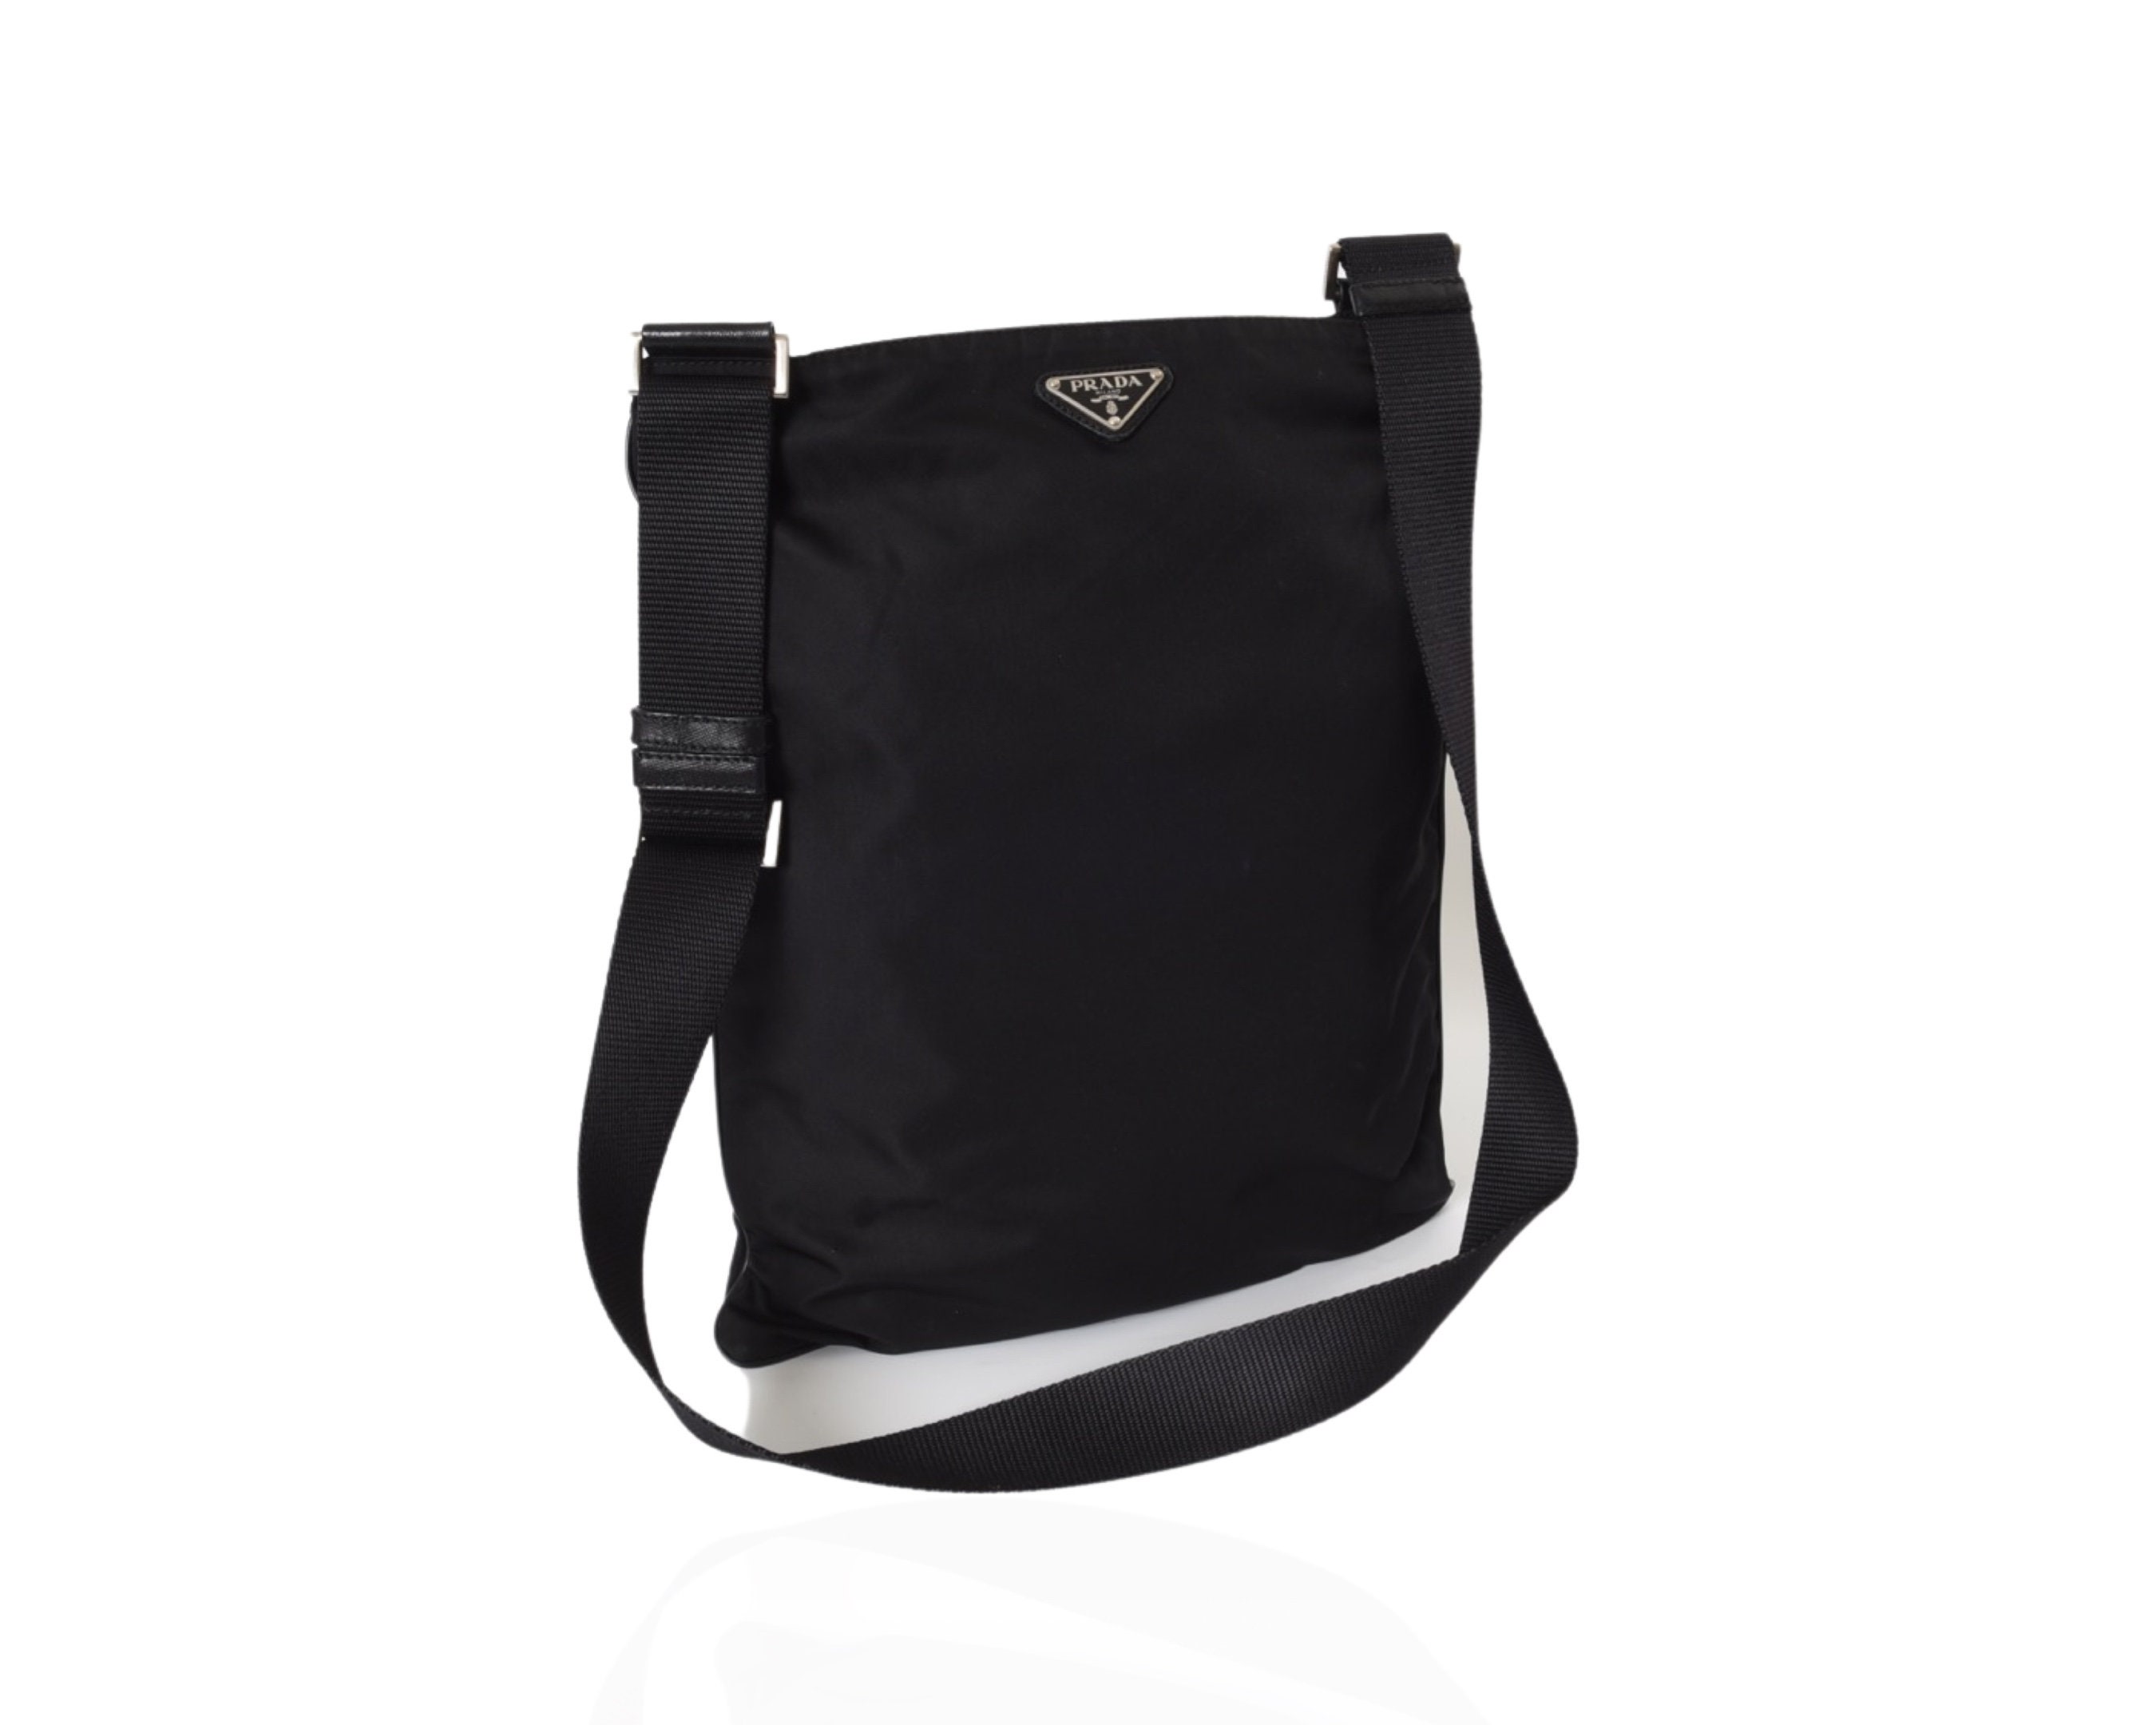 PRADA: System bag in sheepskin - White  Prada crossbody bags 1BD292 2EC9  online at